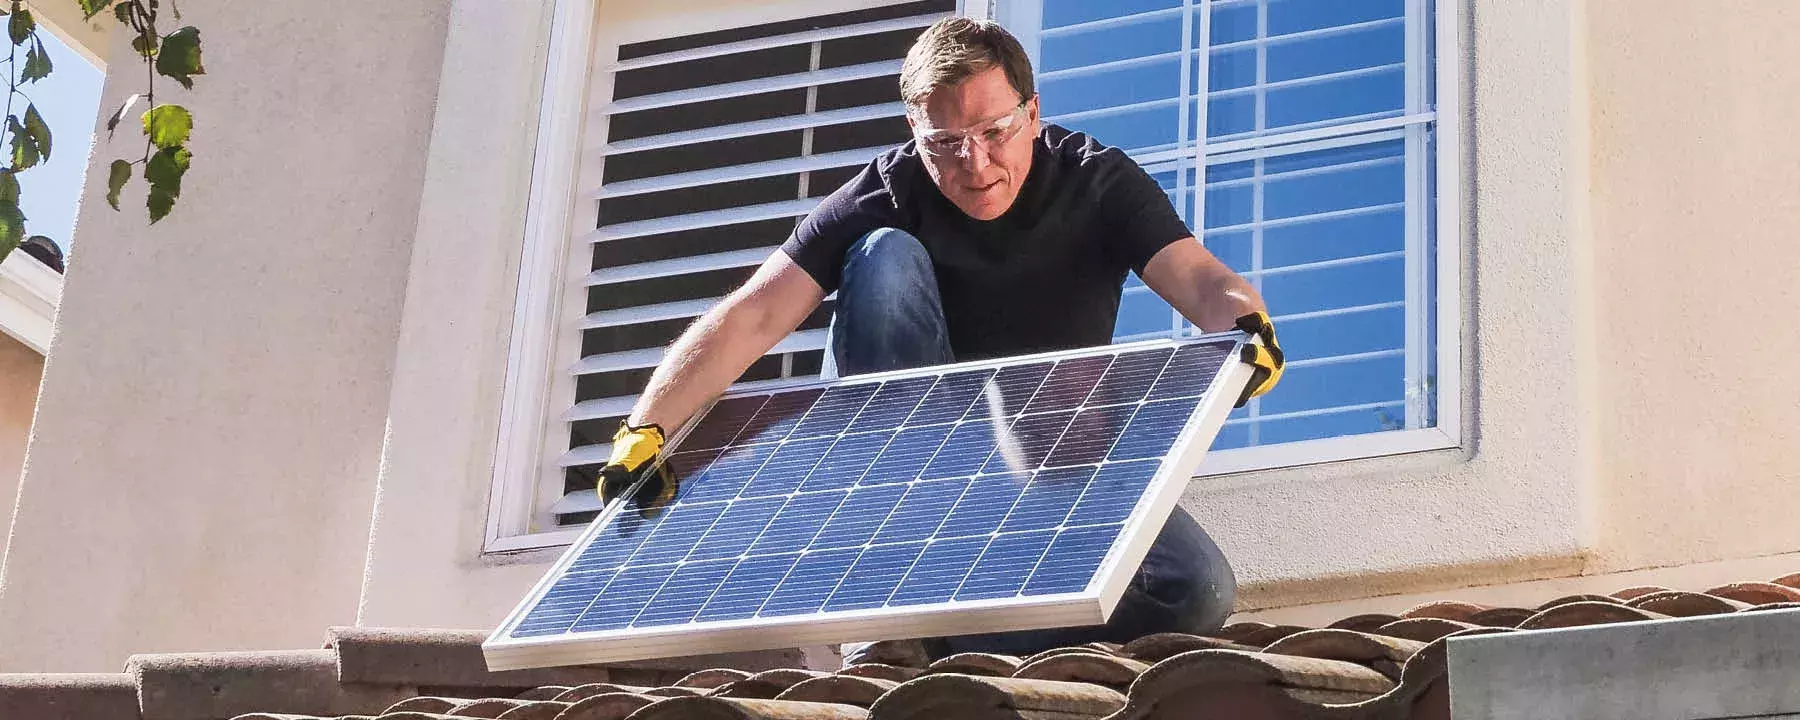 Utilities-Man installing solar panels